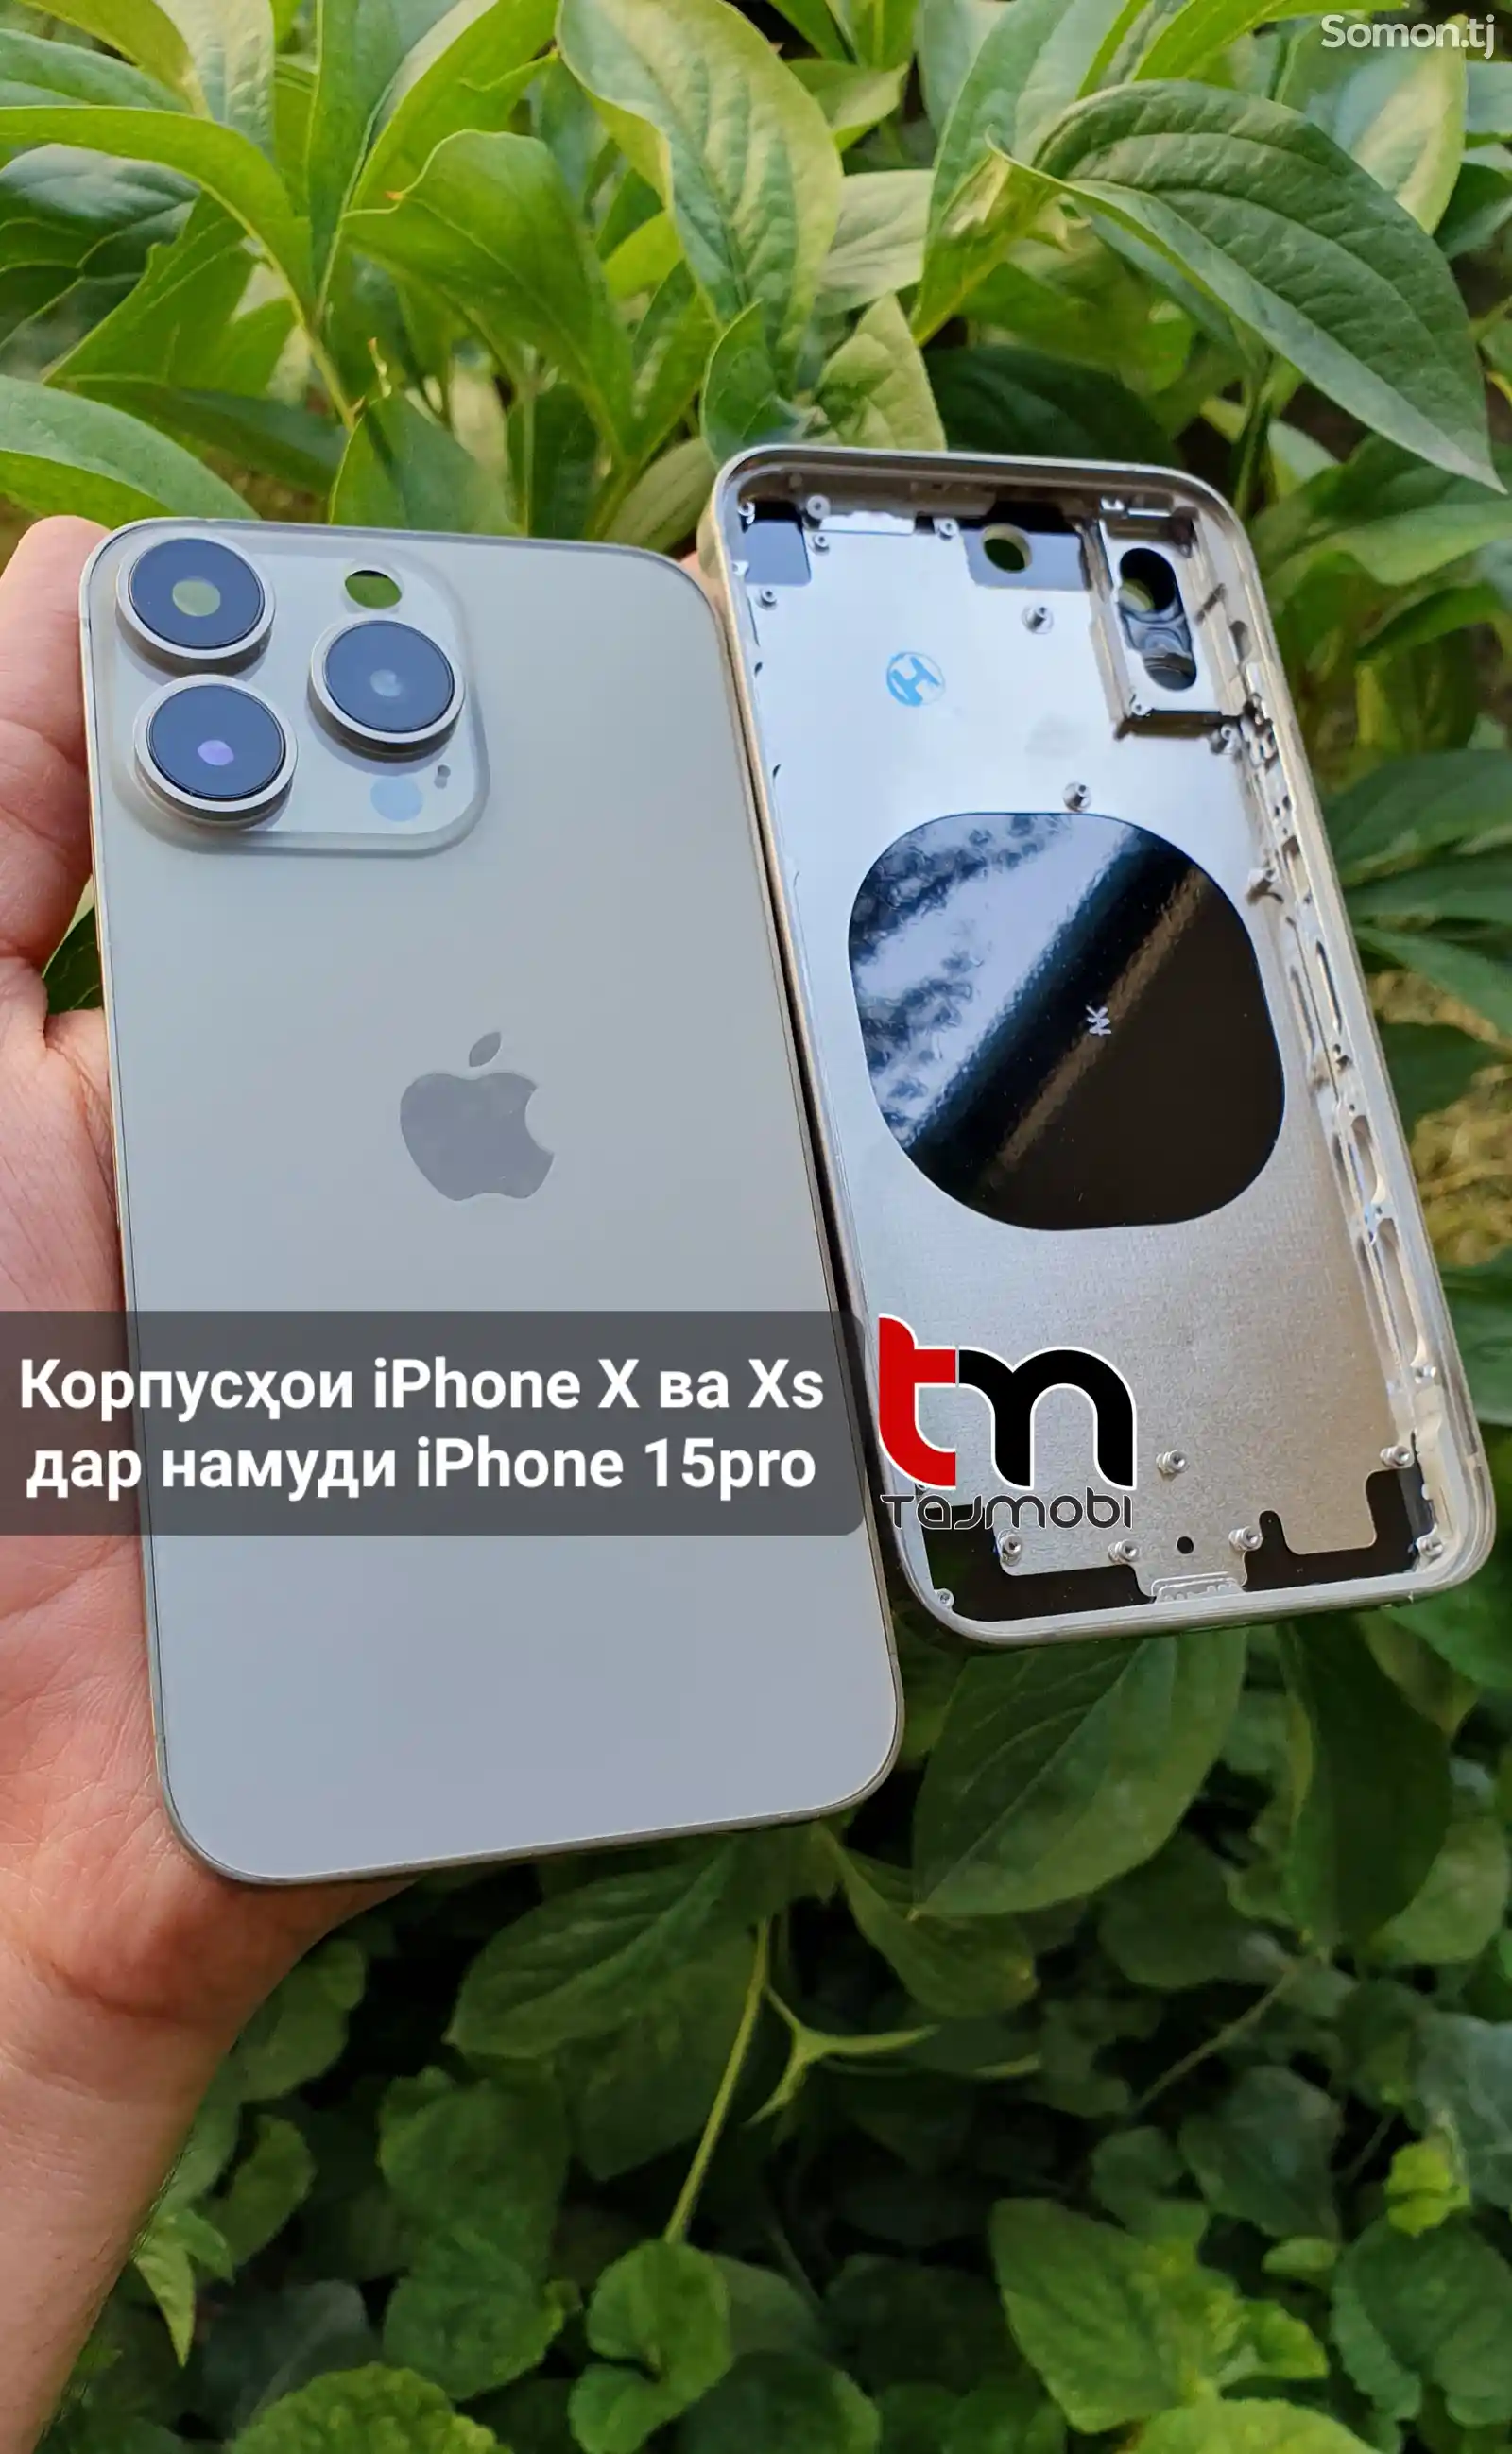 Корпусҳои iPhone X ва Xs ба намуди iPhone 15pro-1